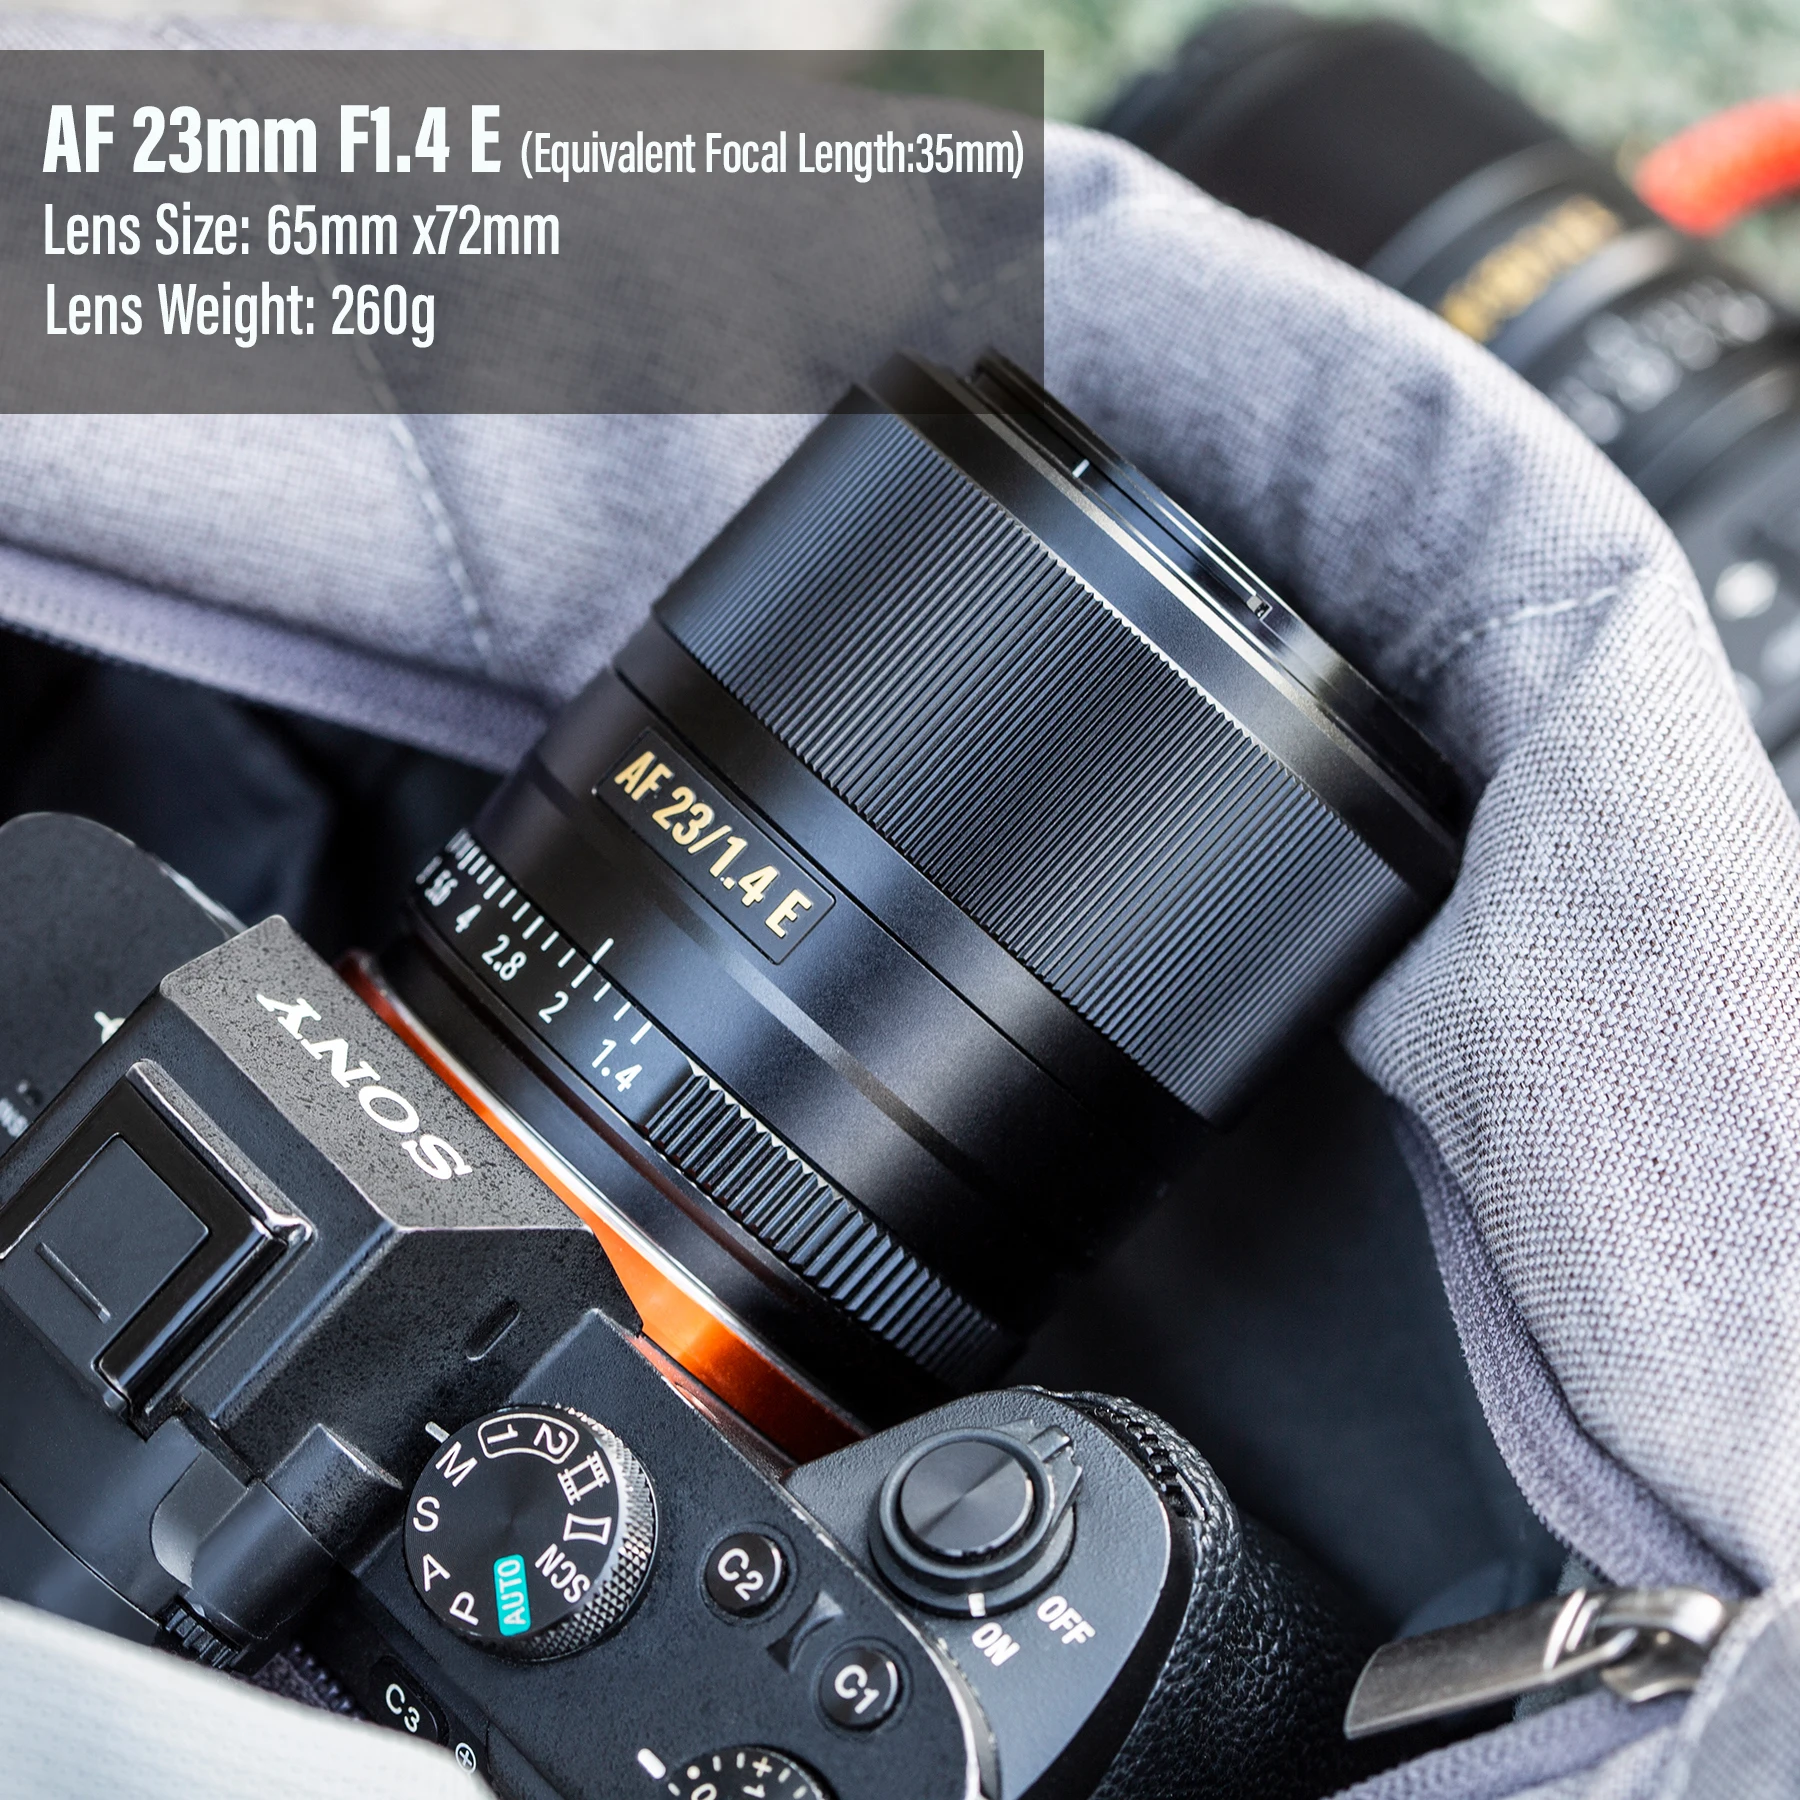 Sigma 16mm F1.4 Dc Dn Large Aperture Fixed Focus Autofocus Portrait Lens  Mirrorless Camera Lens For Canon Sony - Camera Lenses - AliExpress